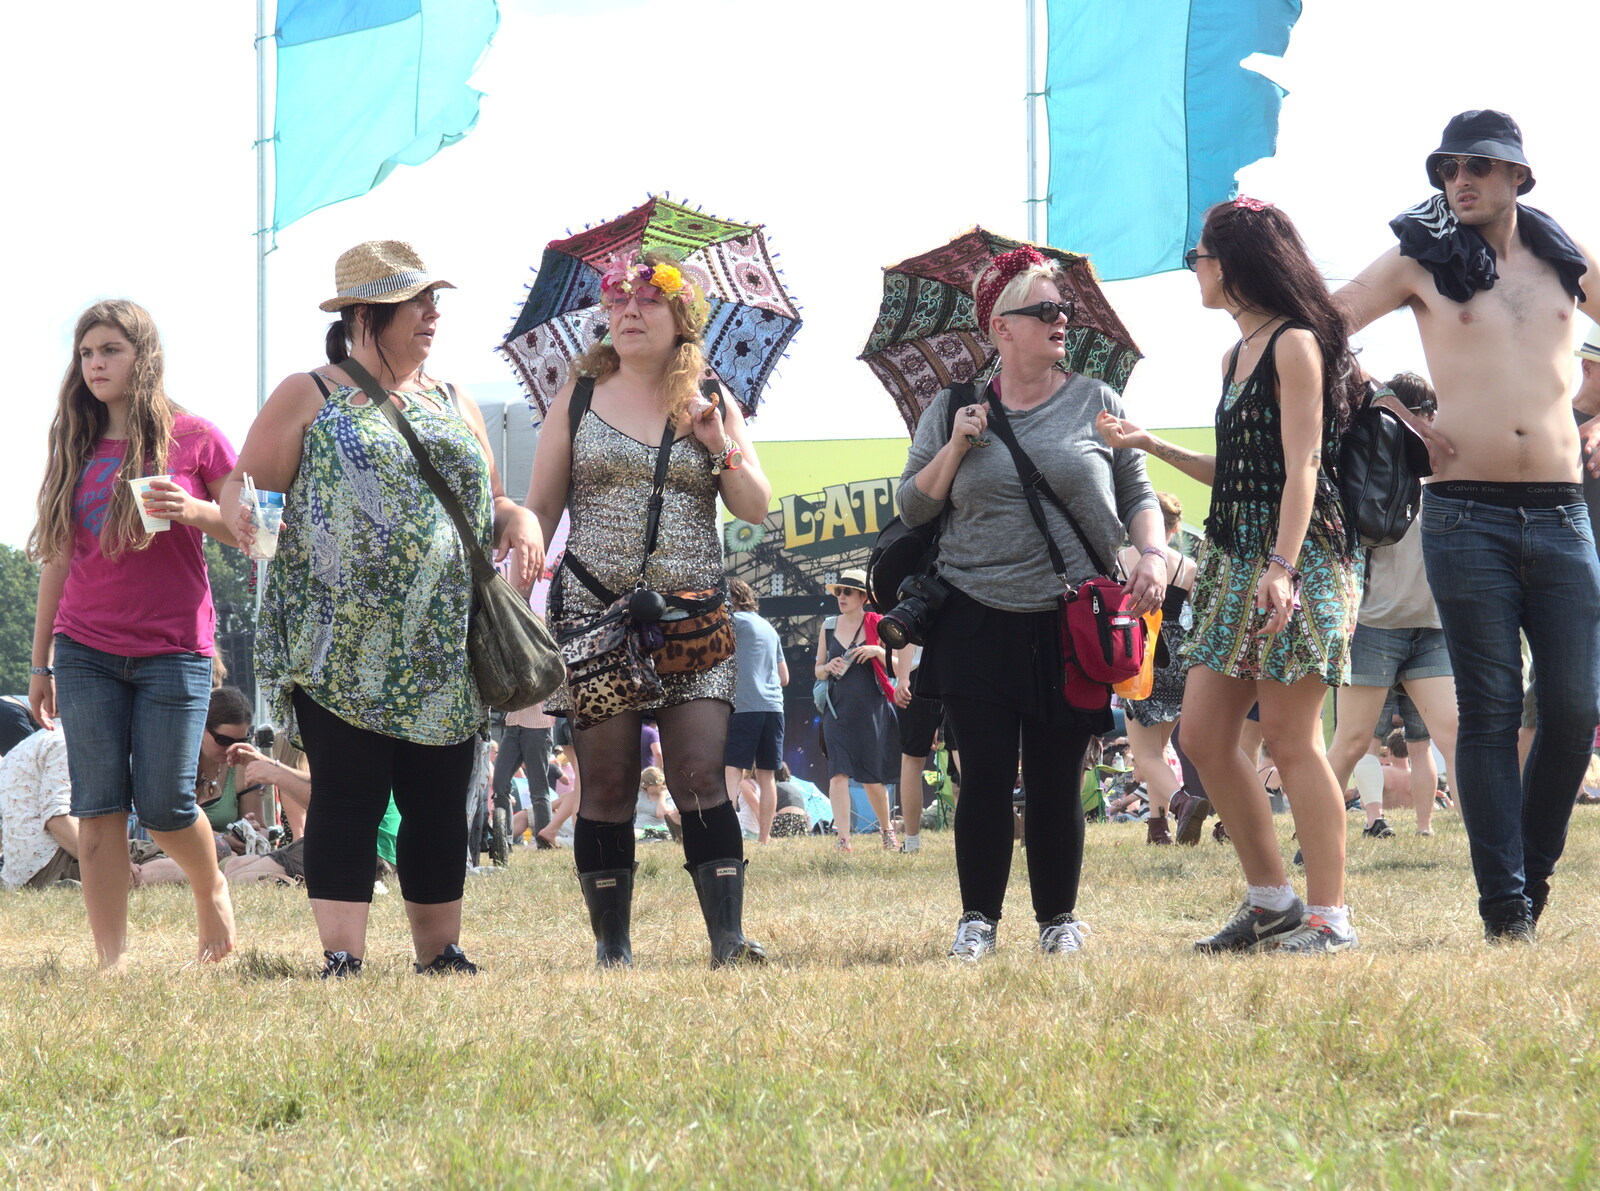 Festival goers from Latitude Festival, Henham Park, Southwold, Suffolk - 17th July 2014